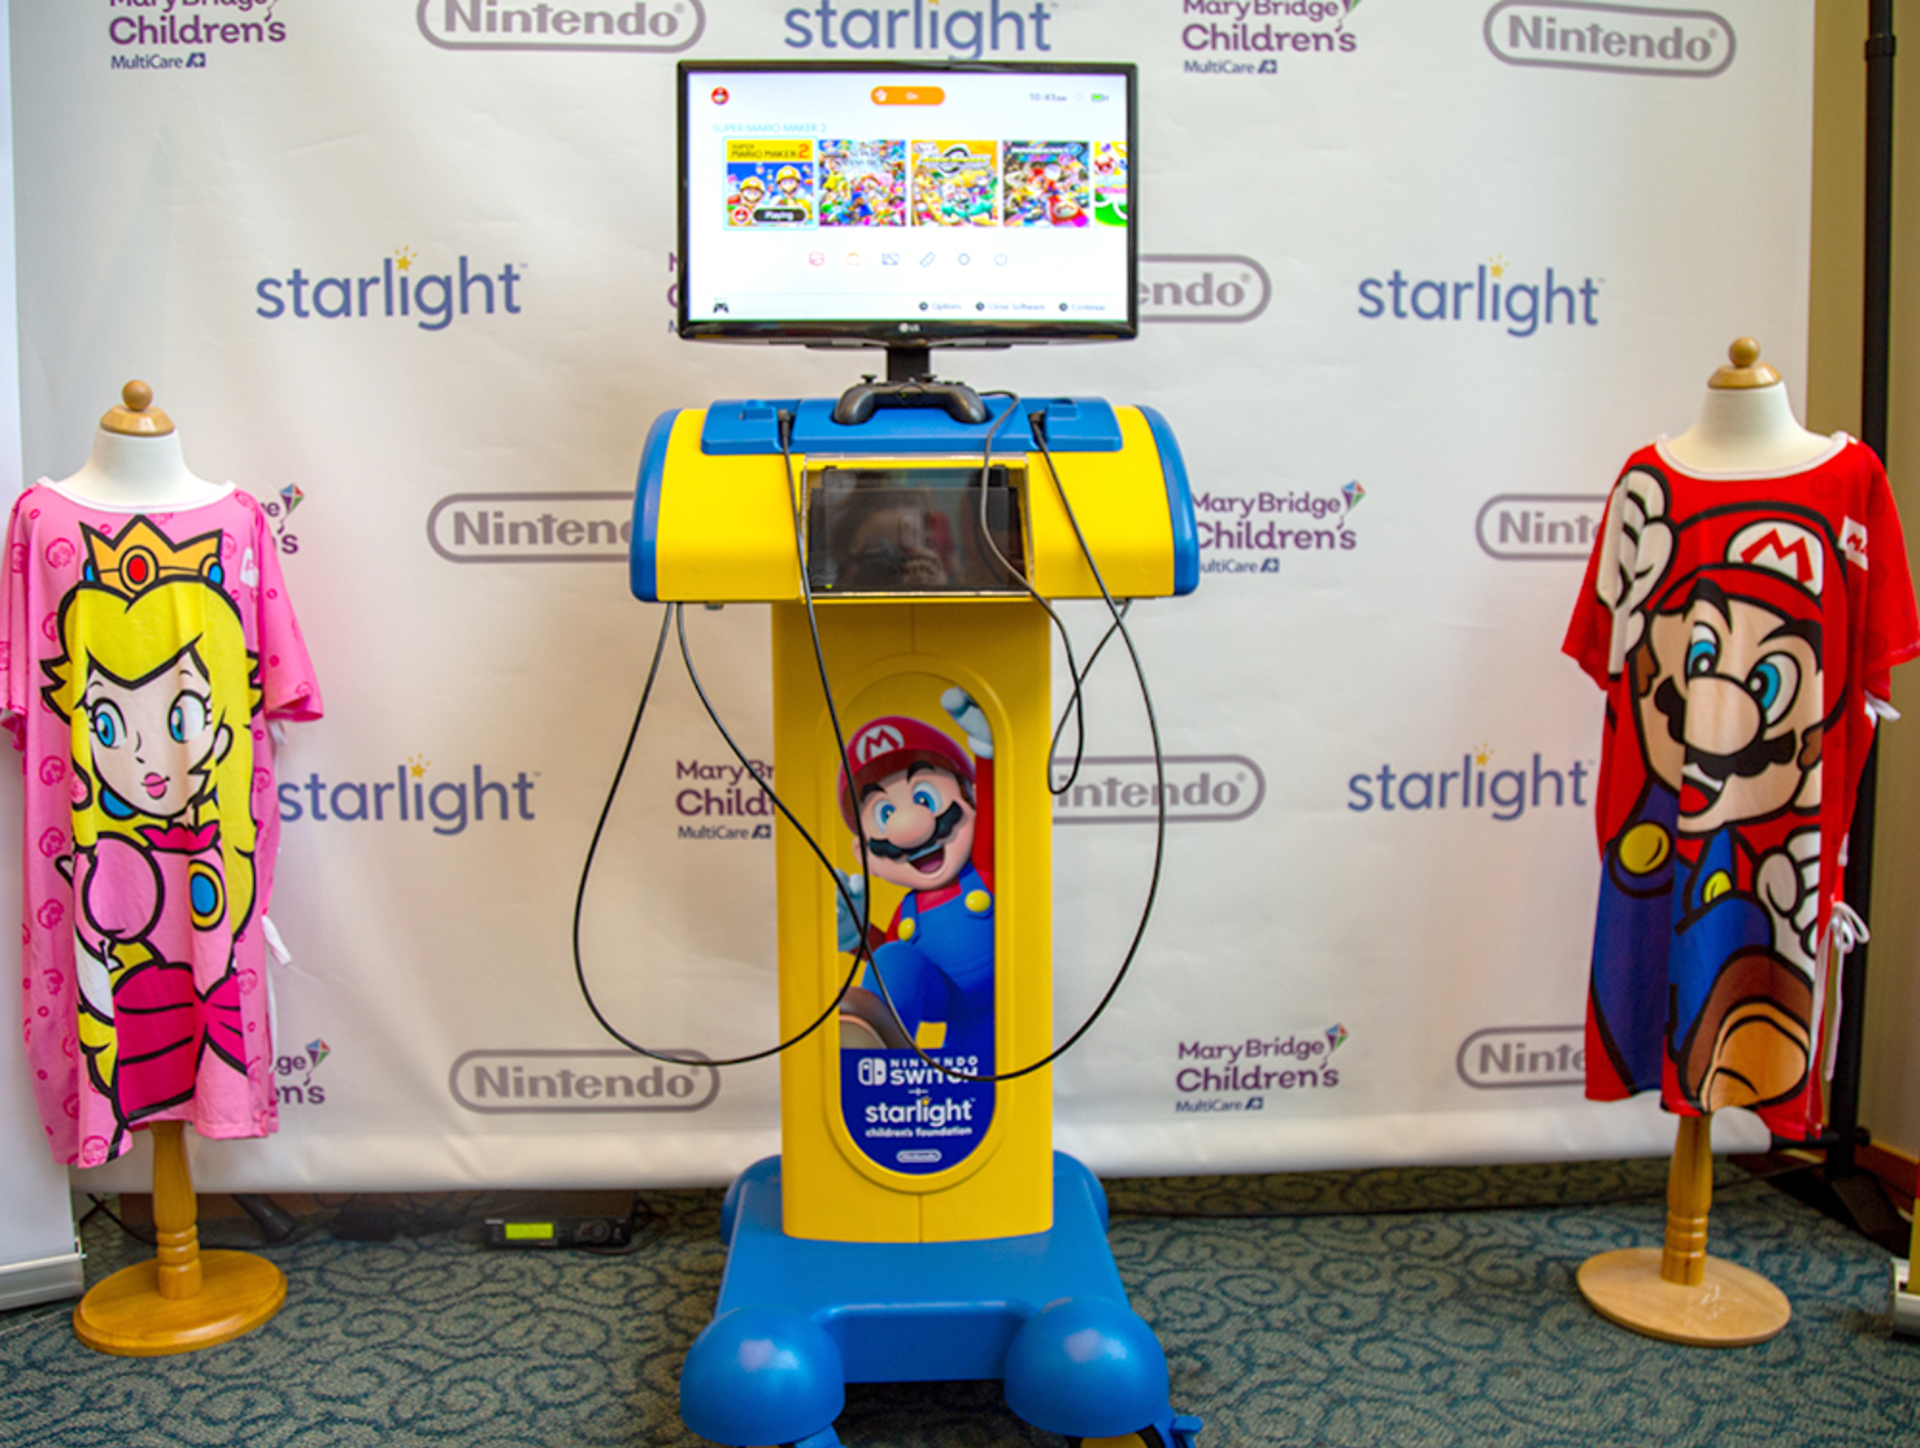 Starlight Nintendo Switch gaming station